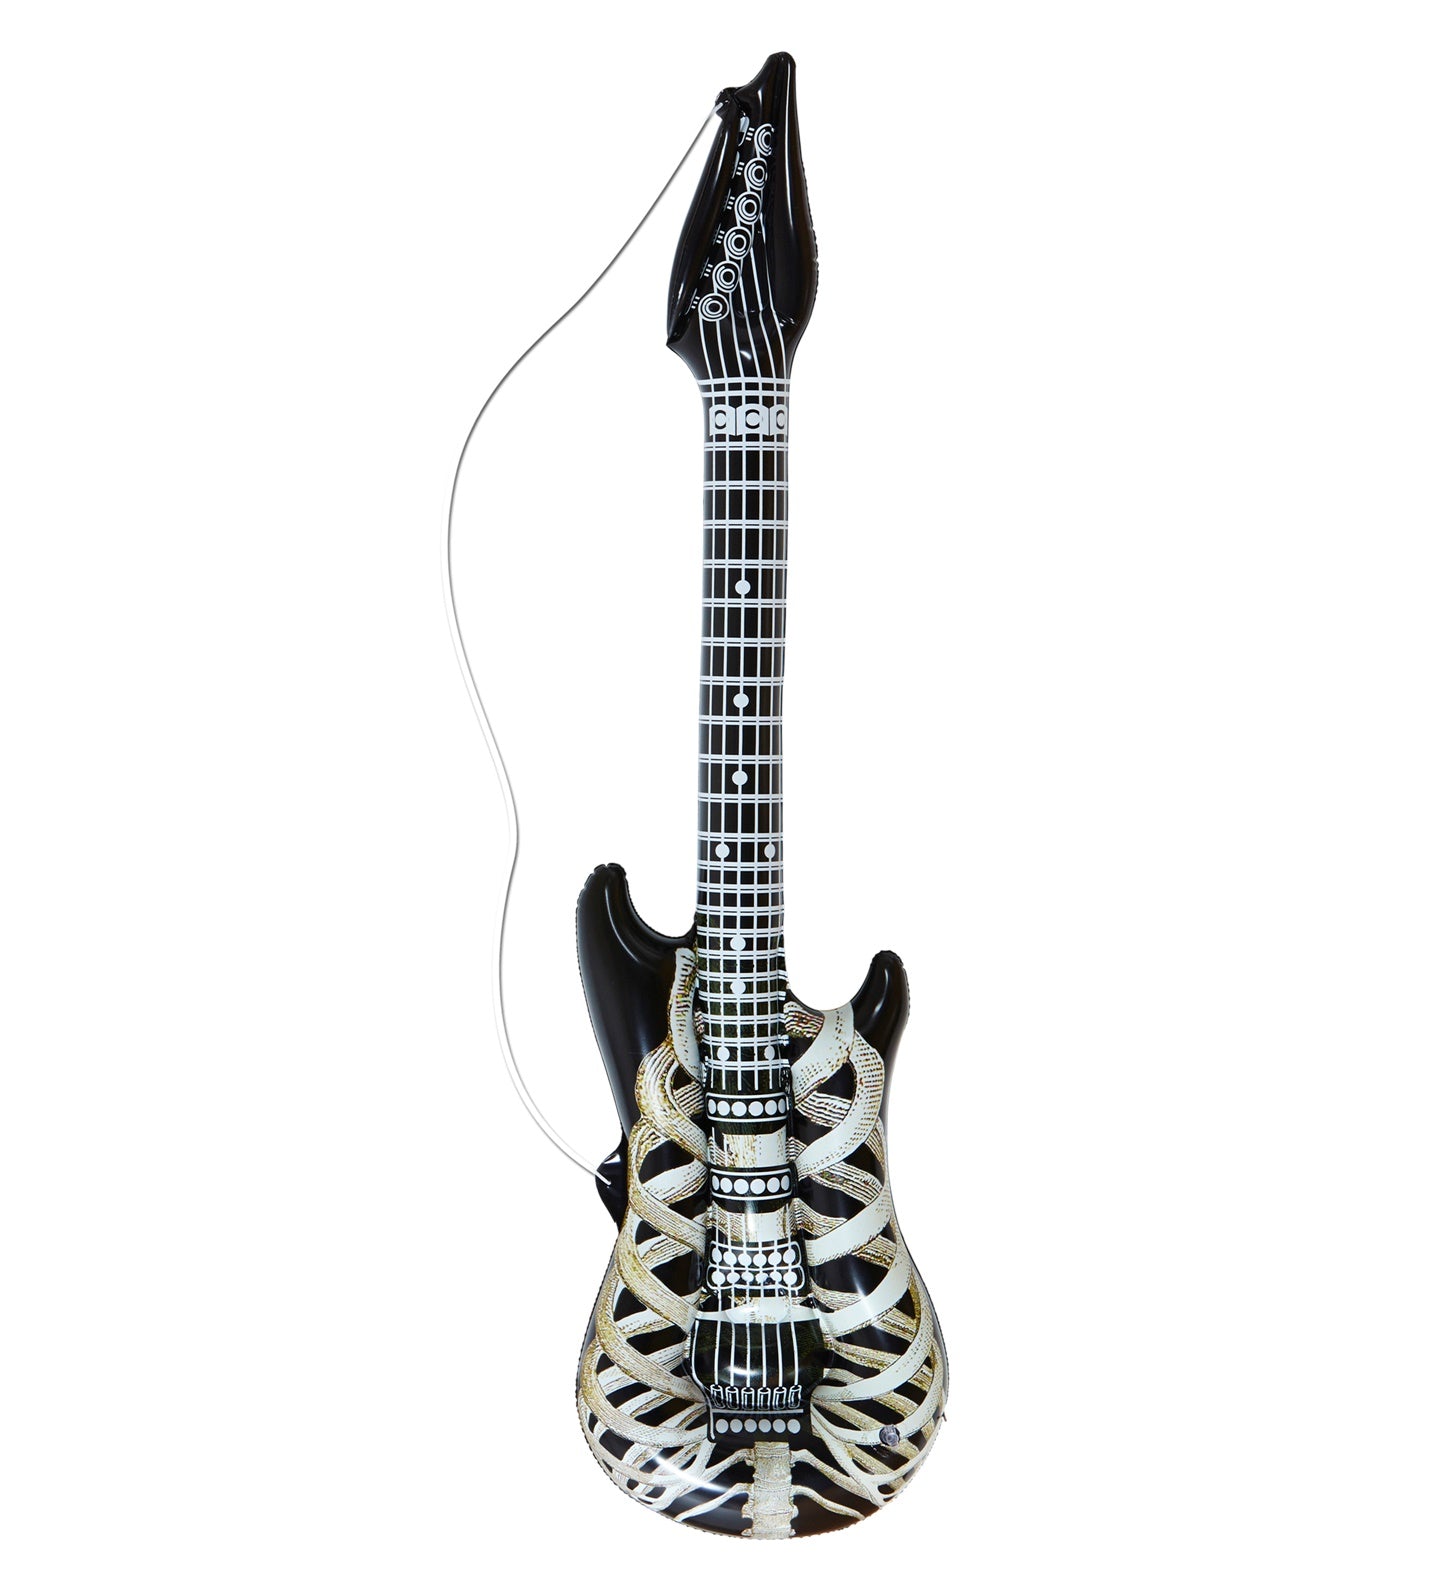 Inflatable Skeleton Guitar